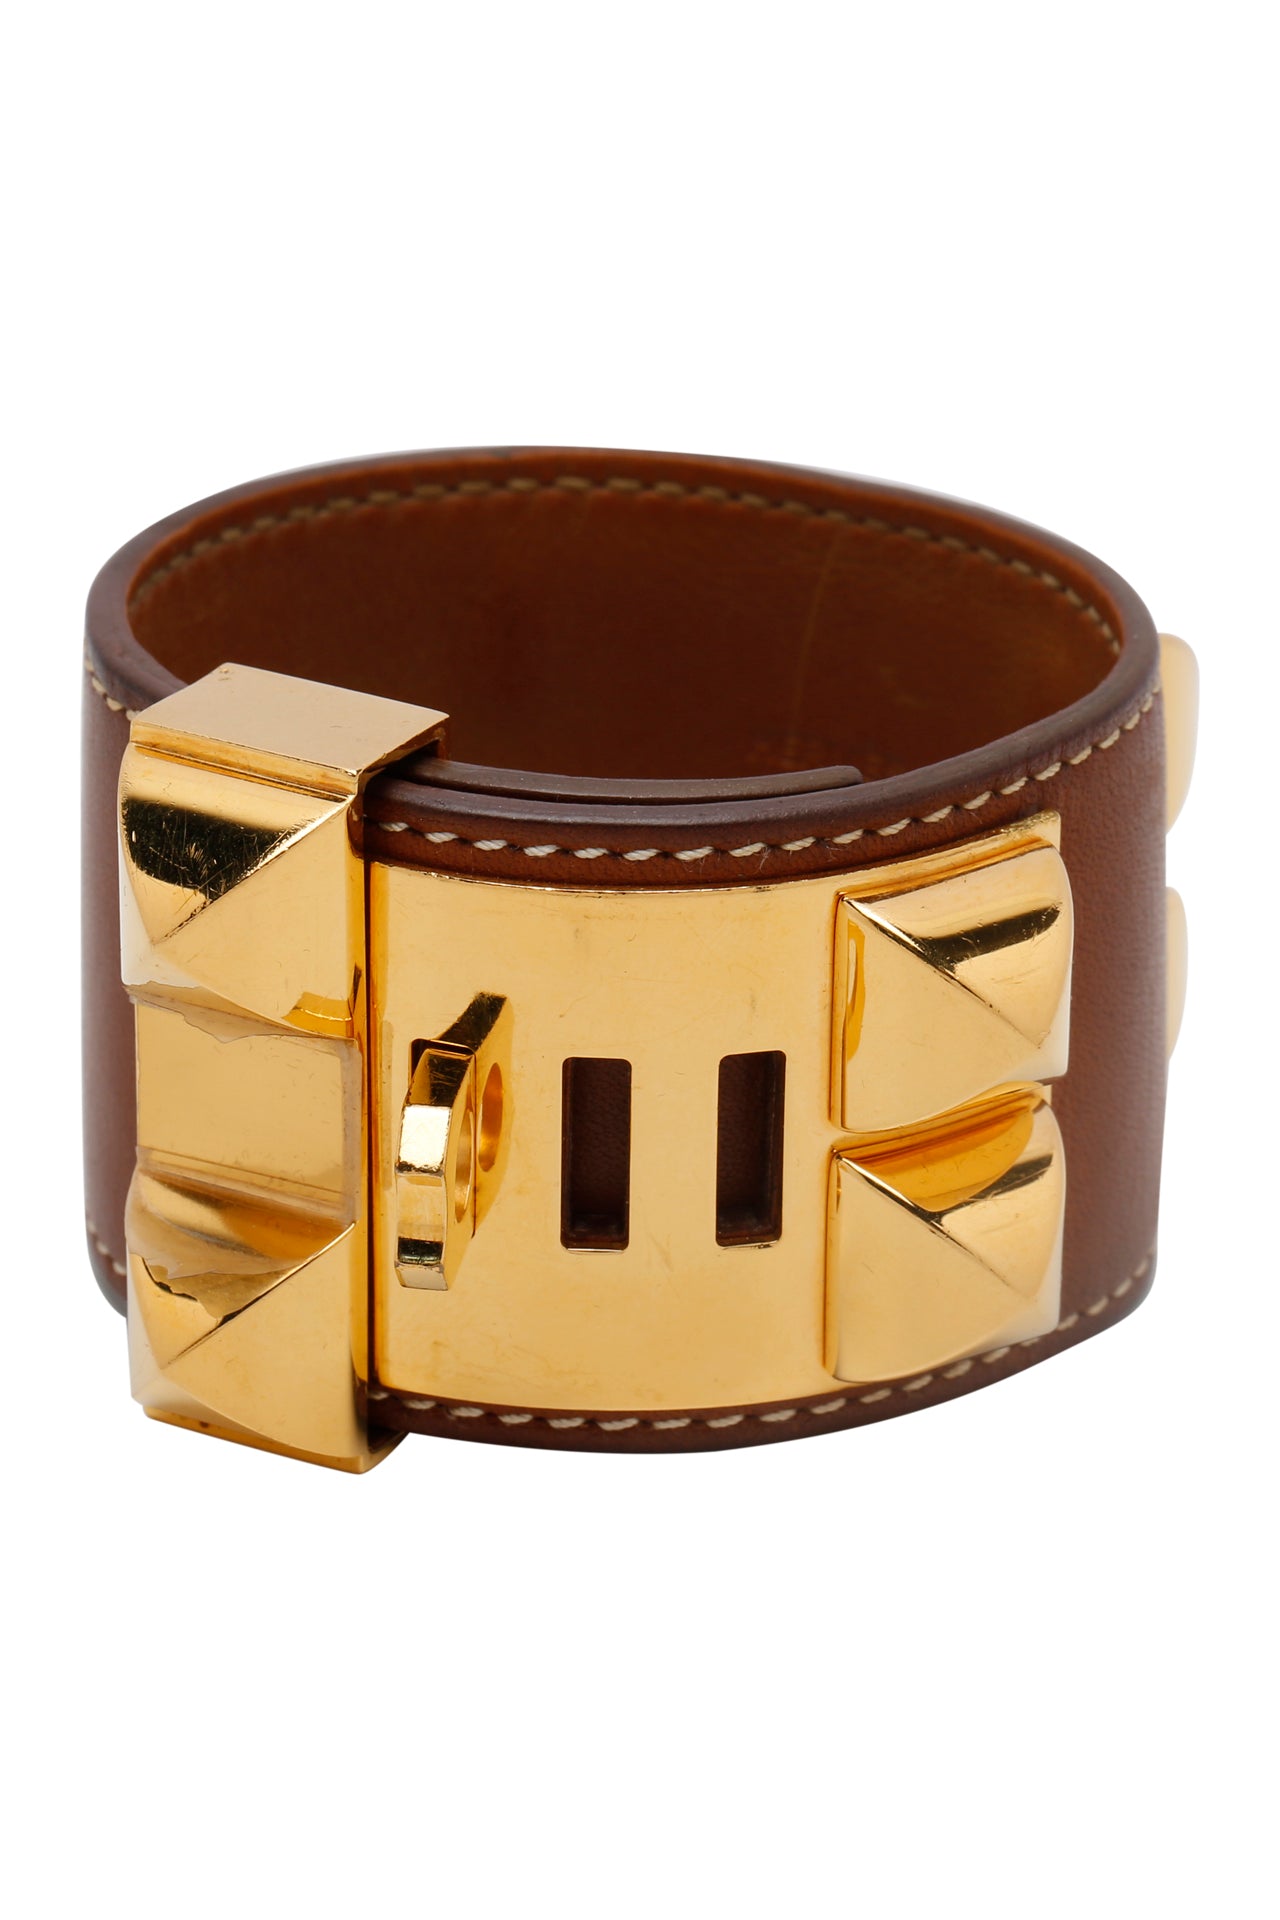 Hermès Collier de Chien Leather Wide Bracelet Brown